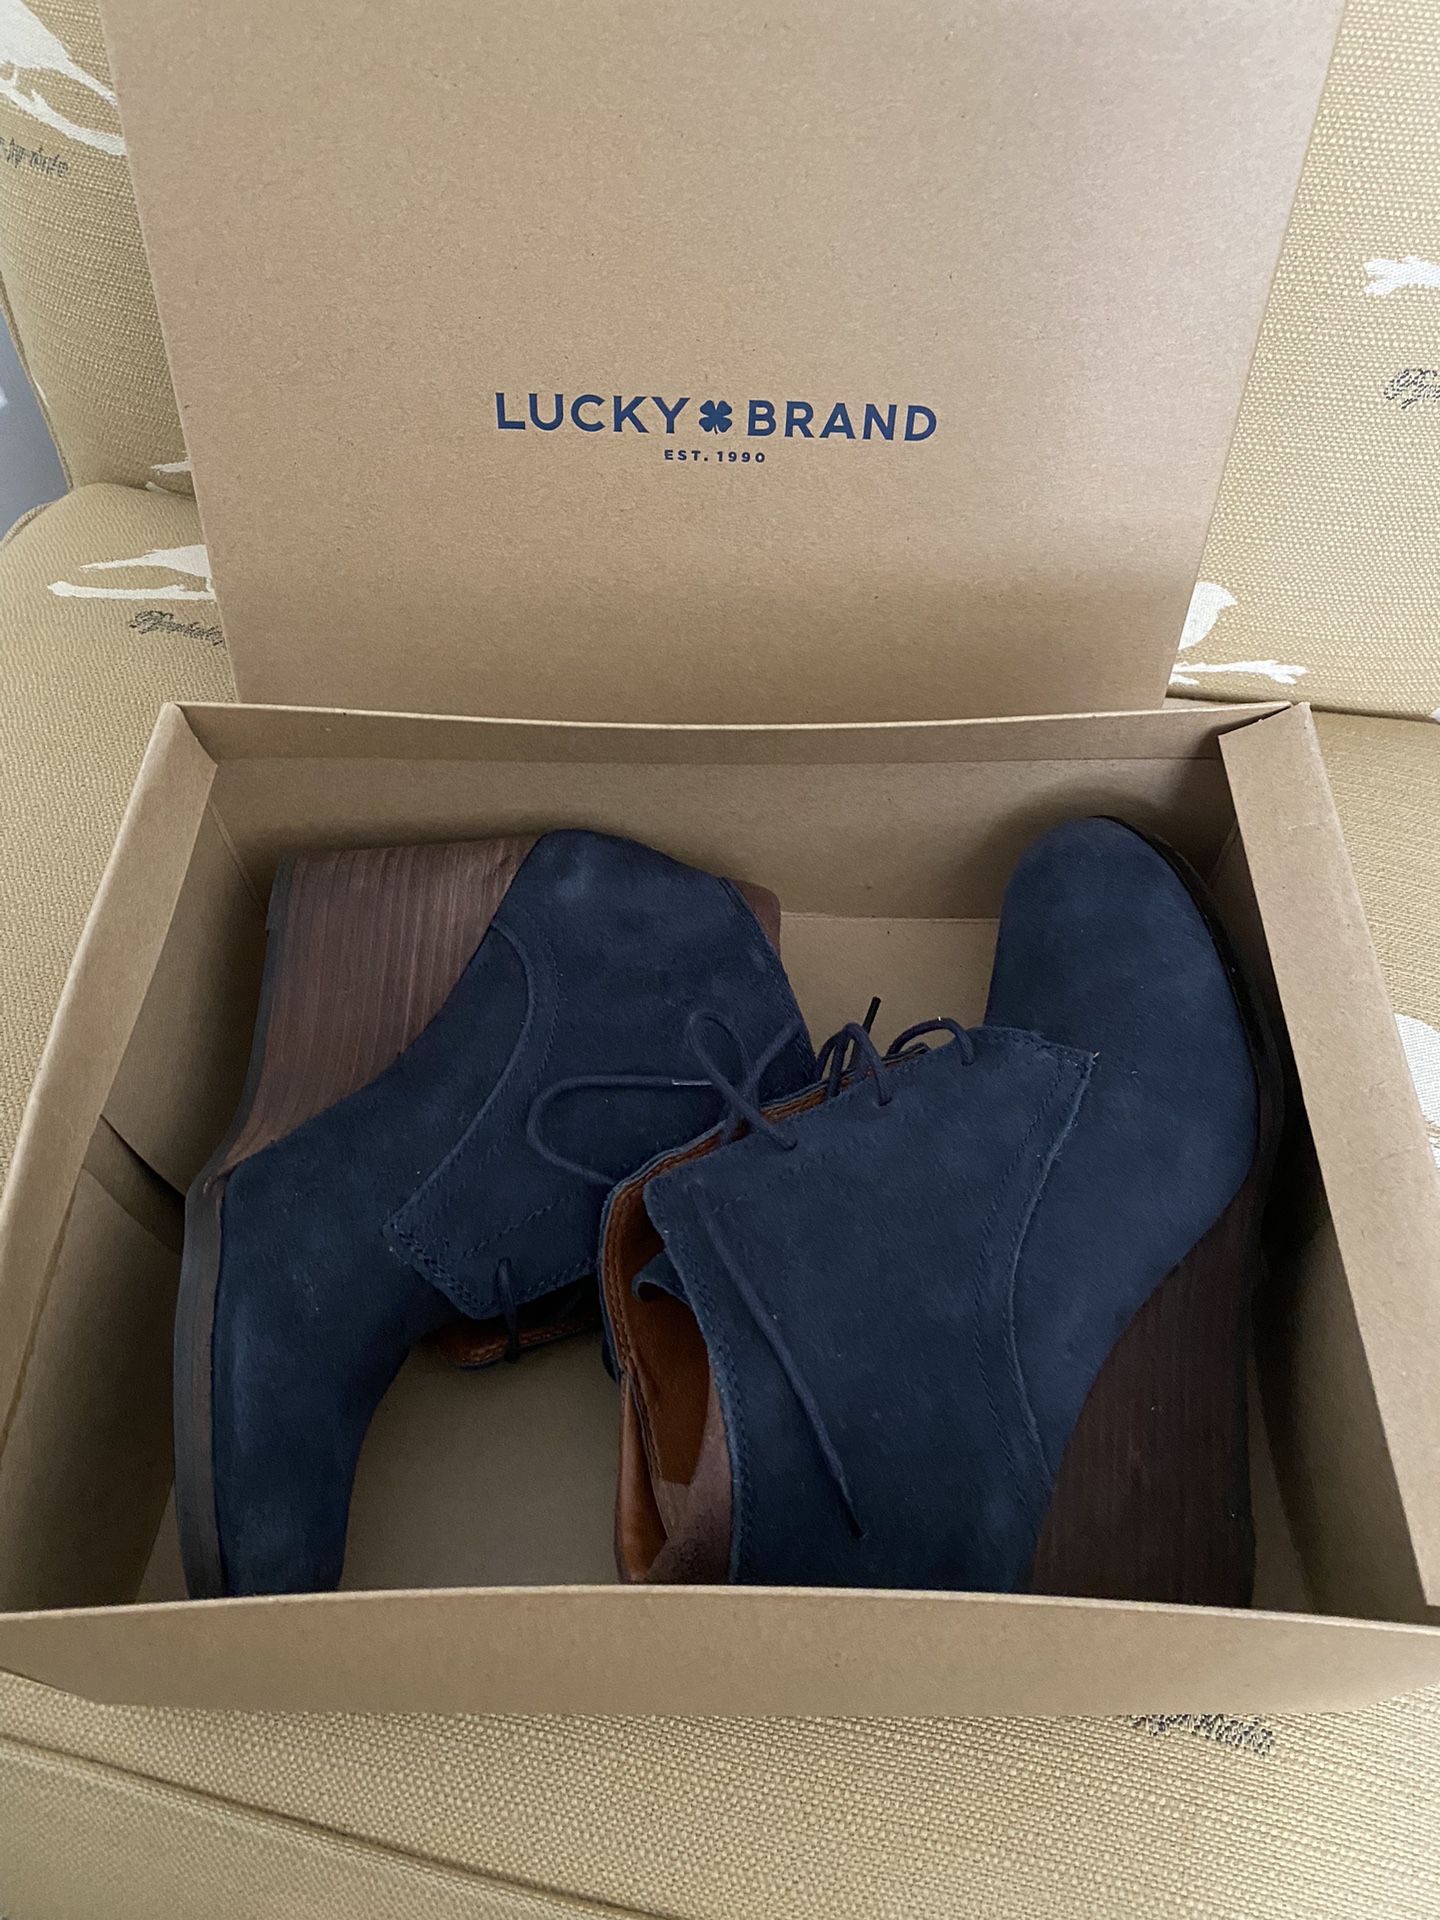 Lucky Brand Boots